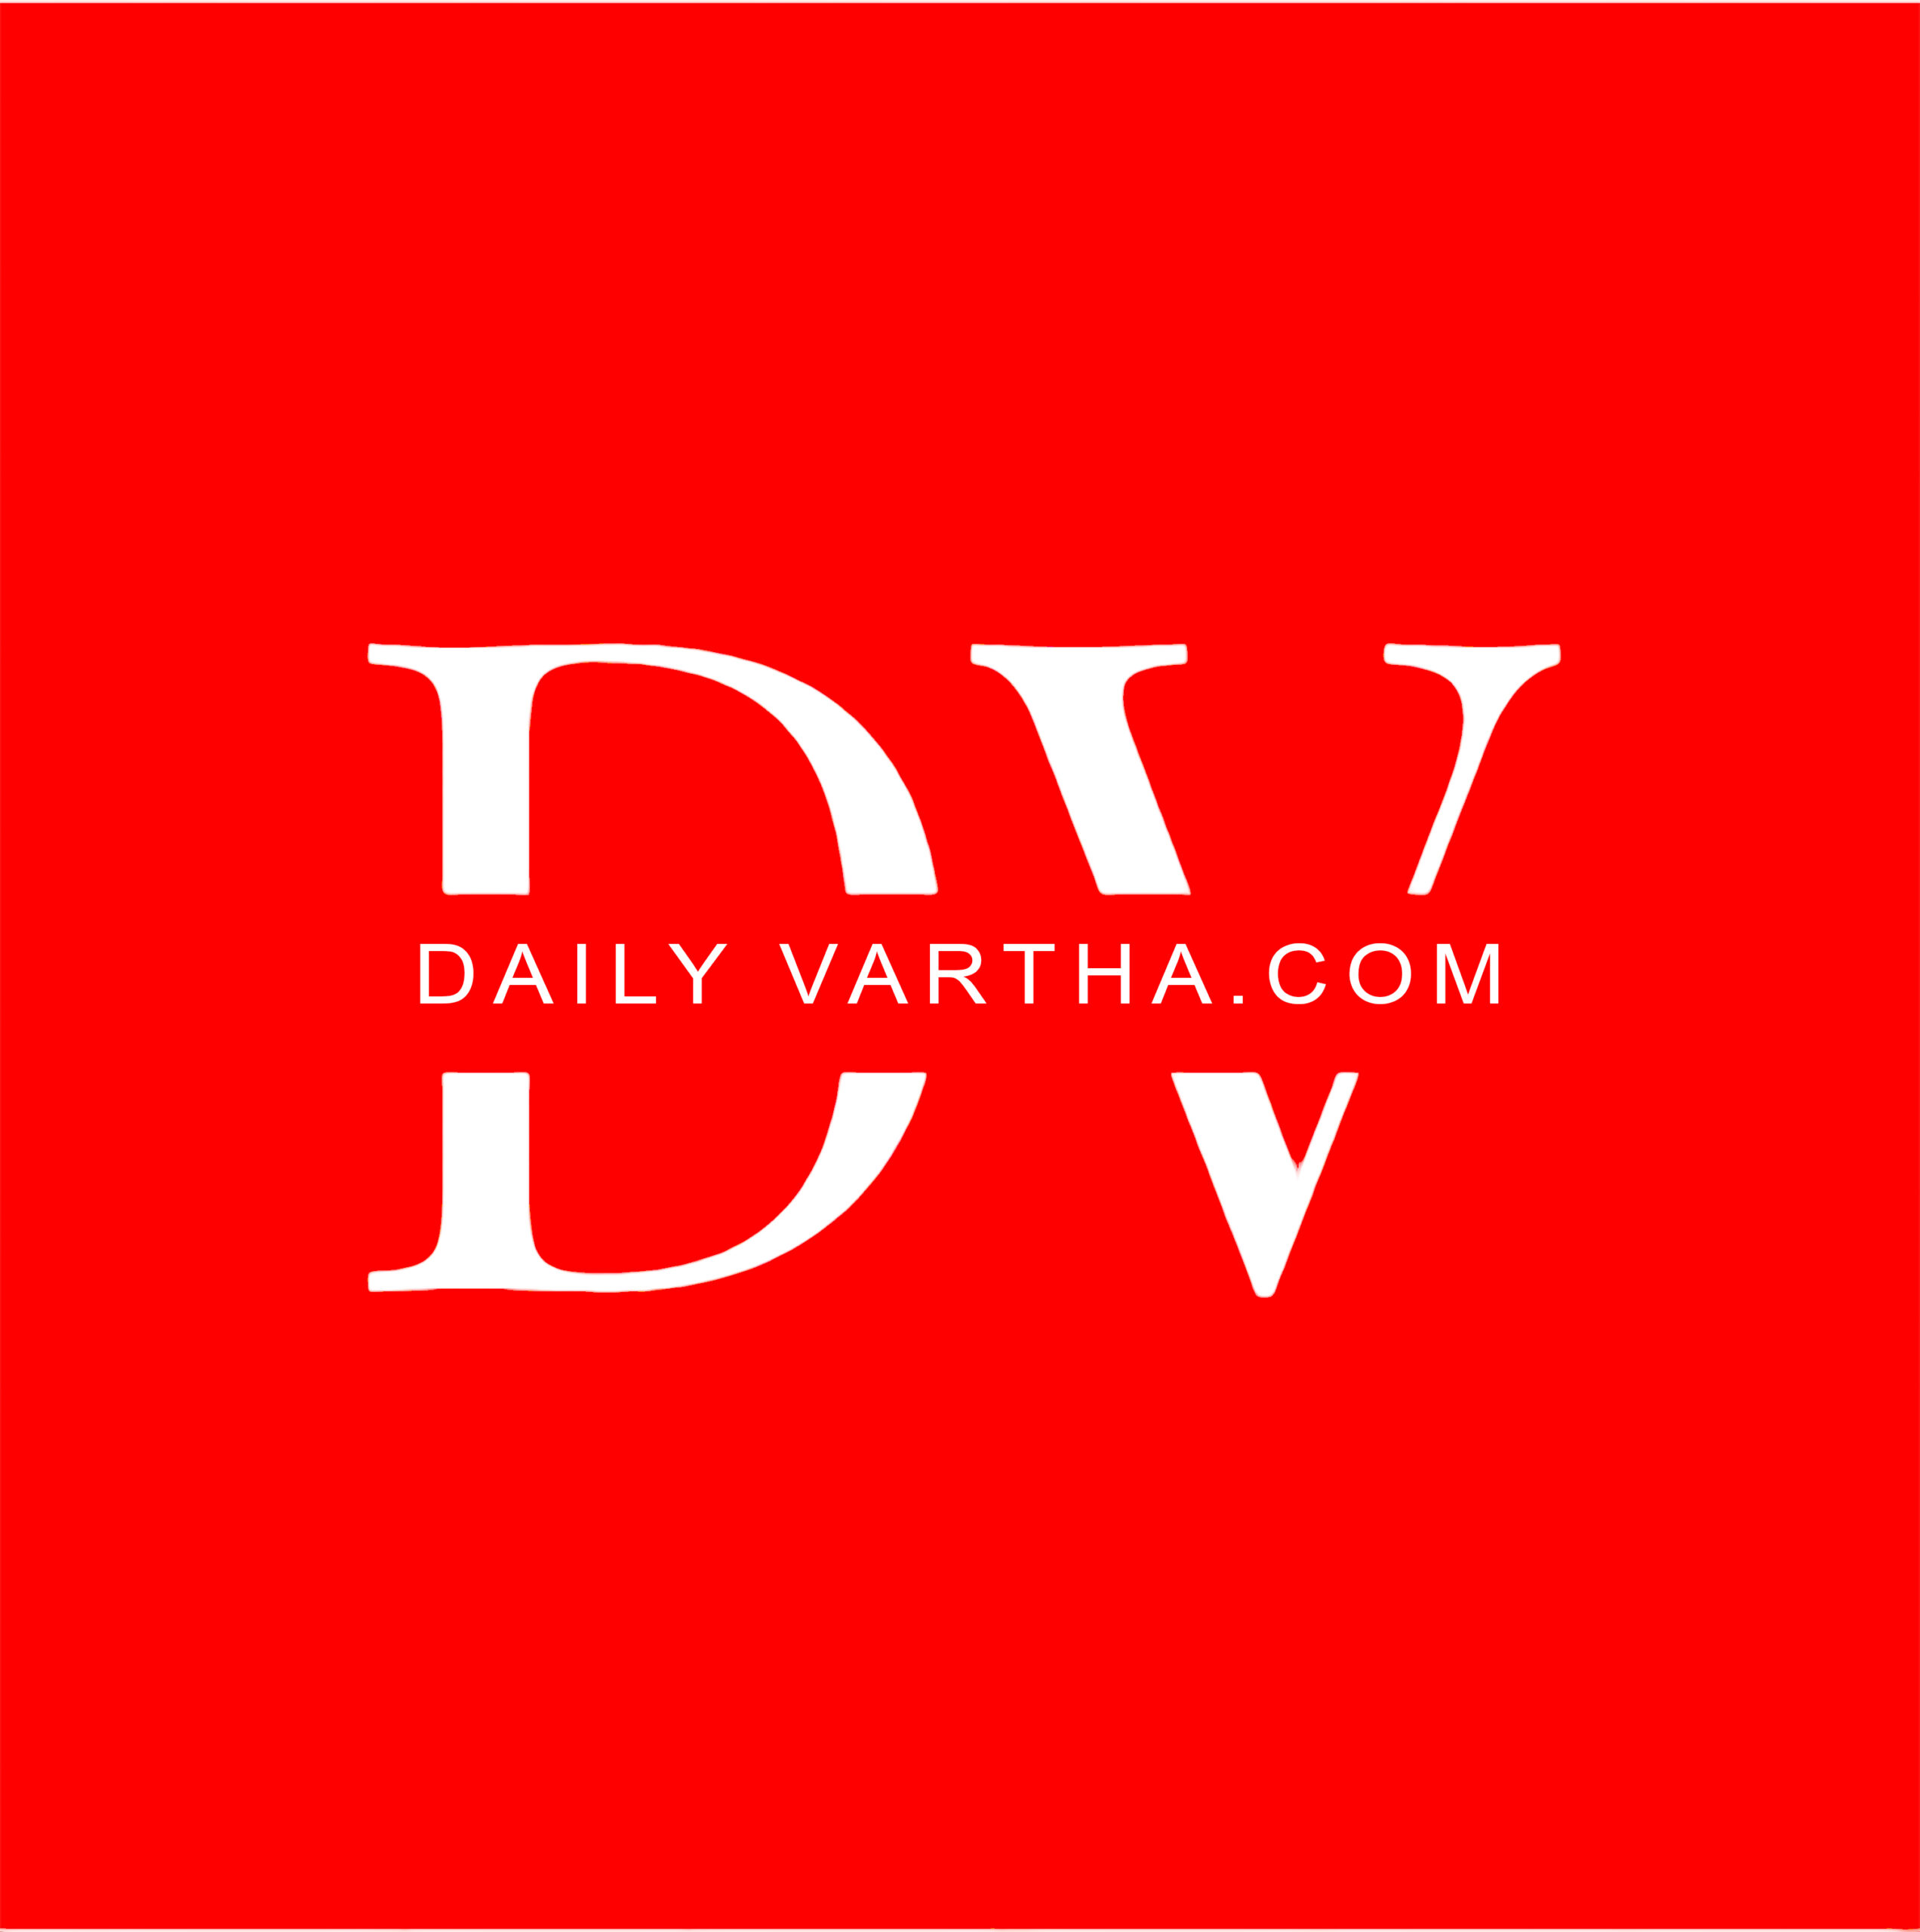 dailyvartha.com